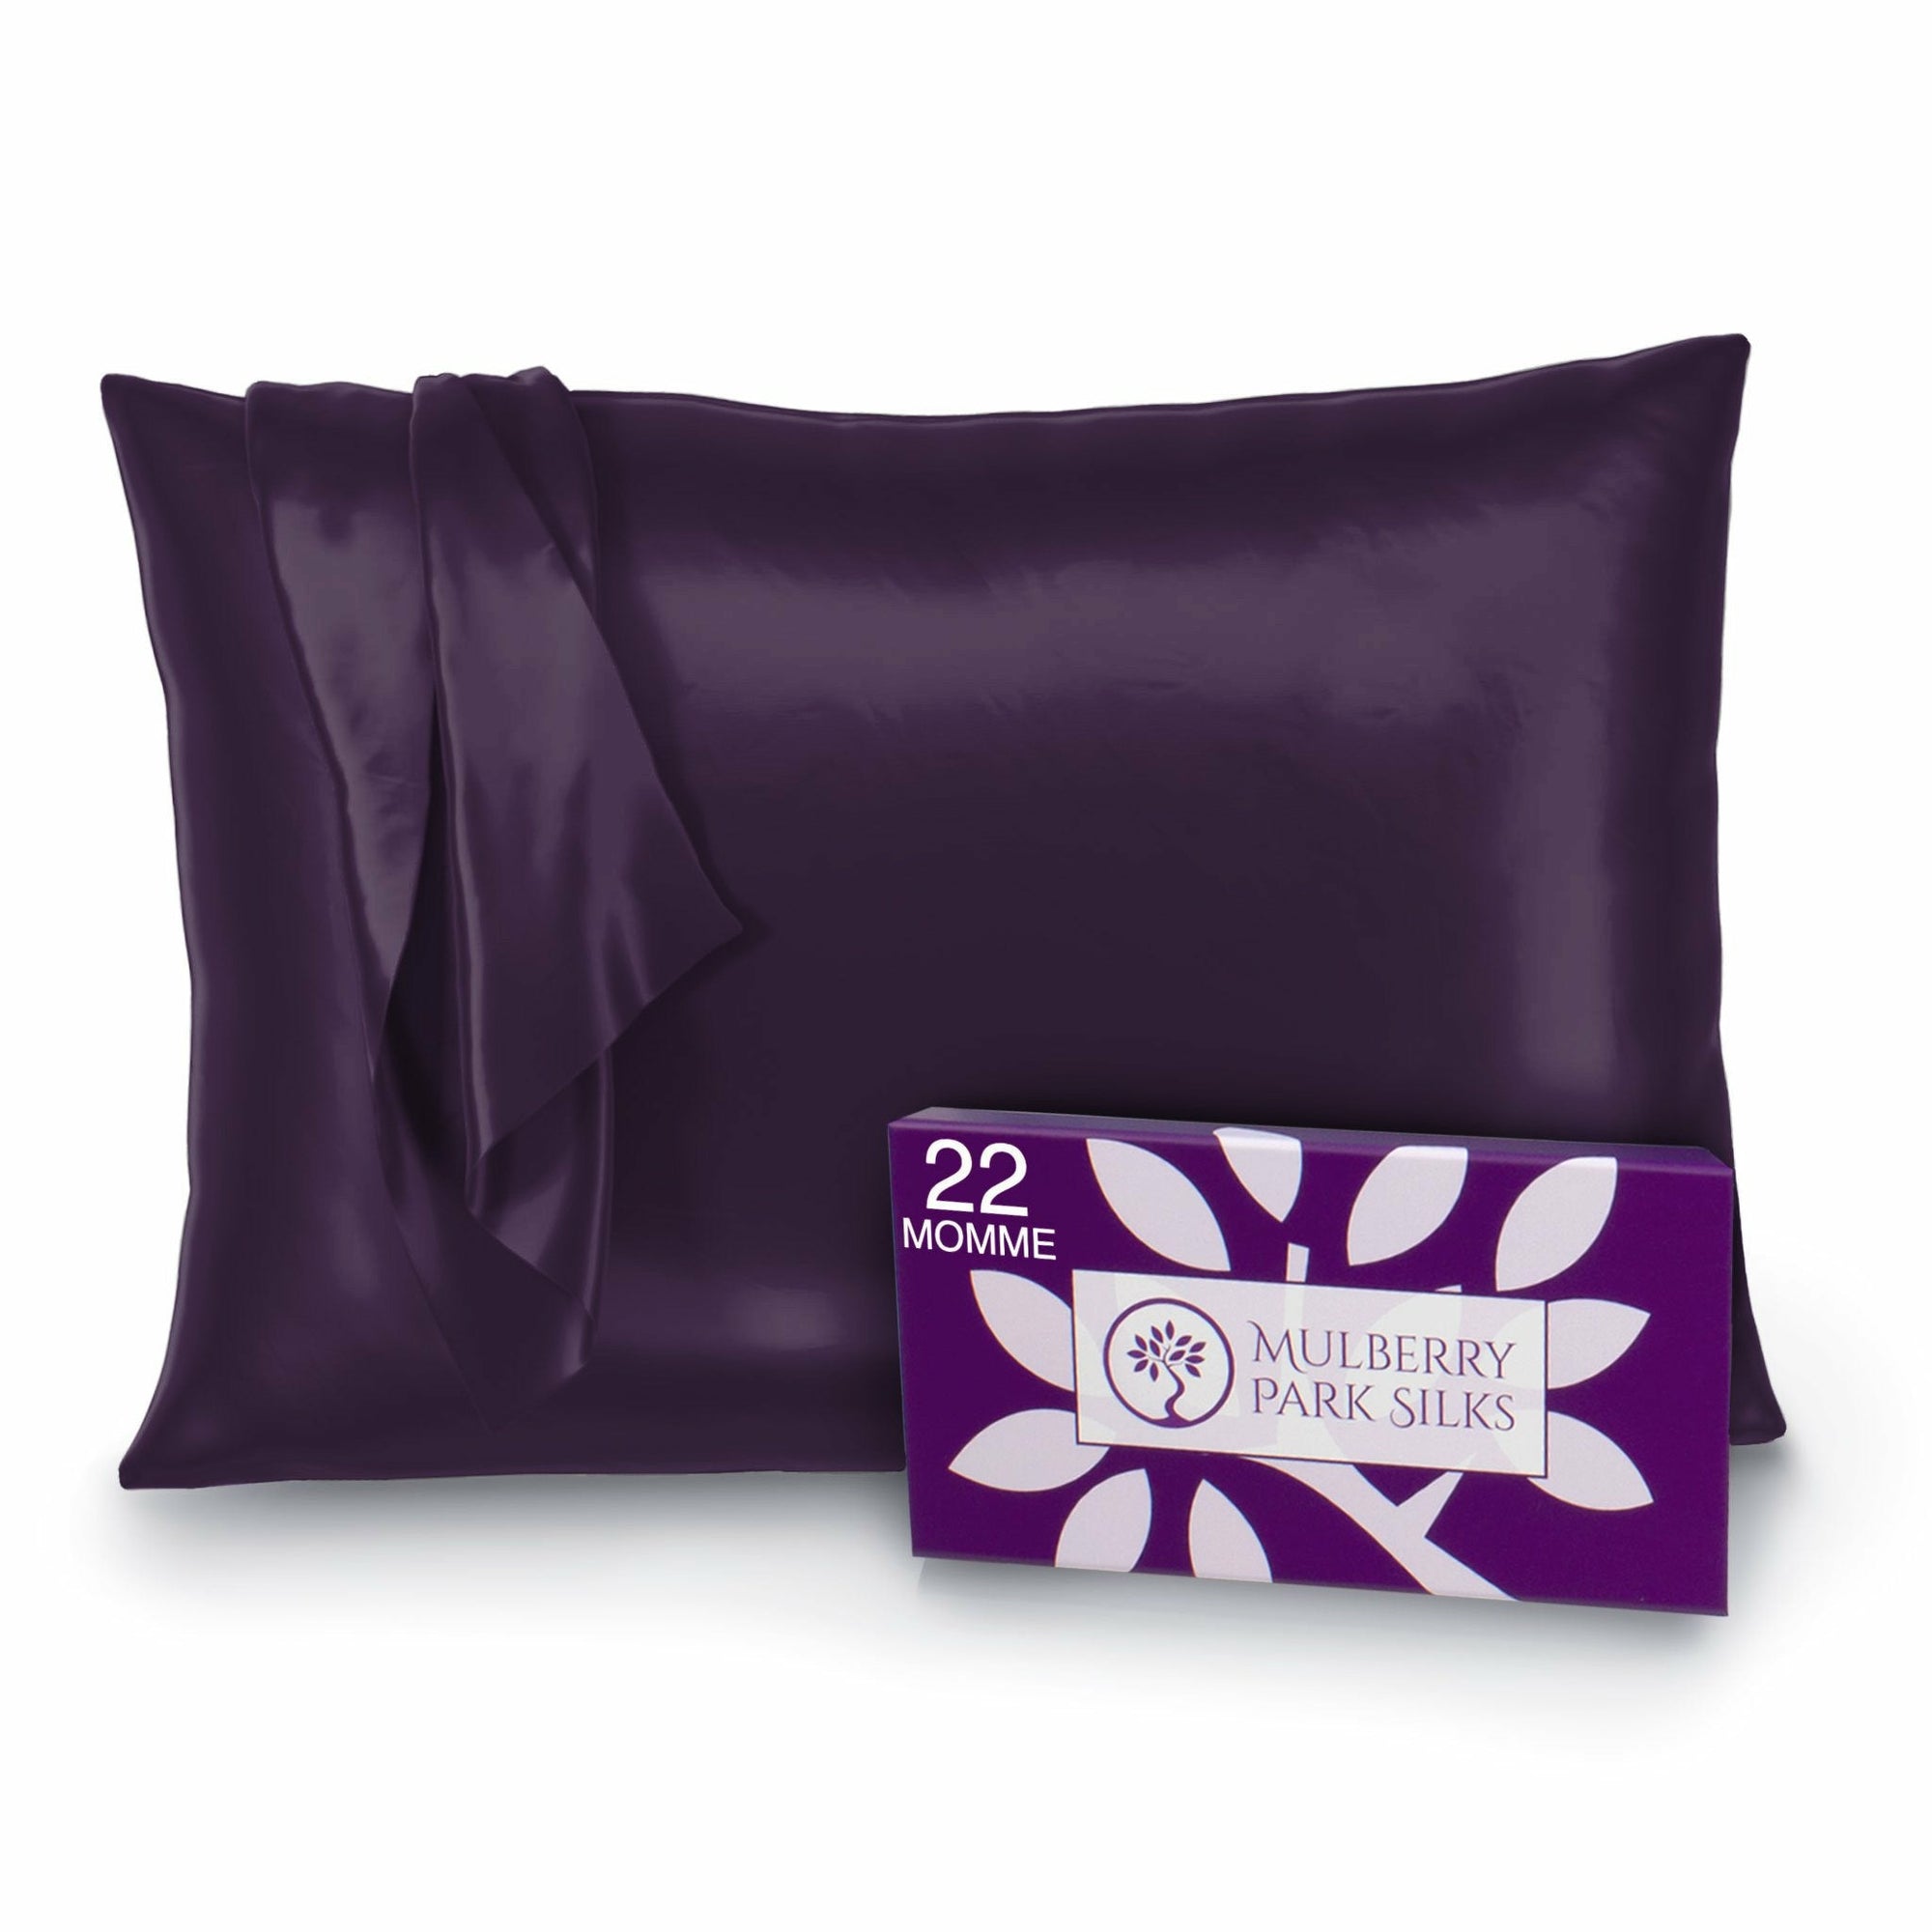 Mulberry Park Silks Deluxe 22 Momme Pure Silk Pillowcase Main Plum Fine Linens